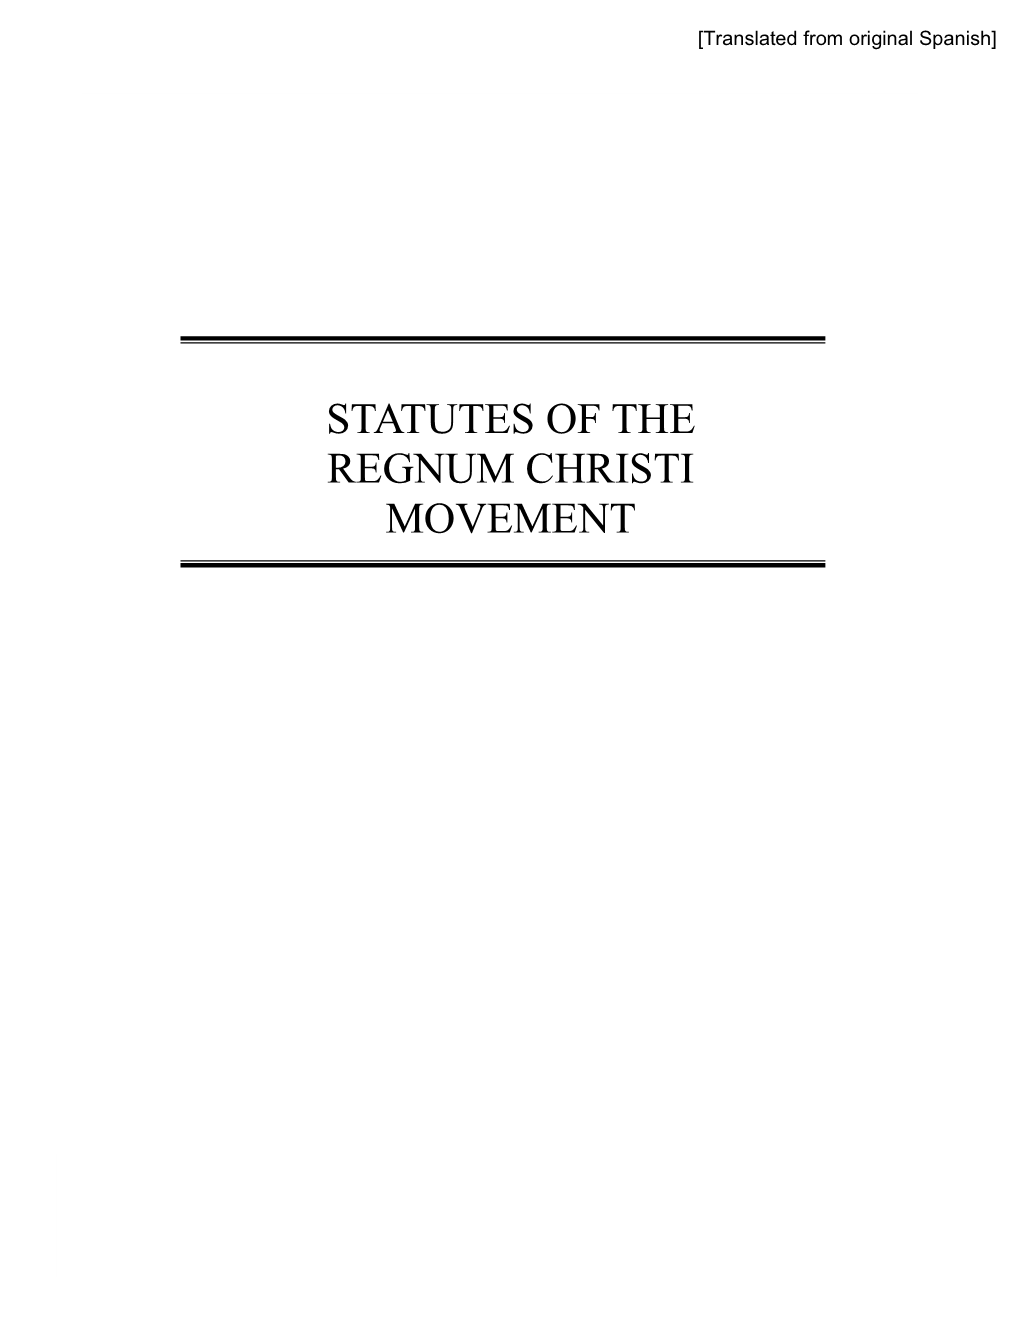 Statutes of the Regnum Christi Movement